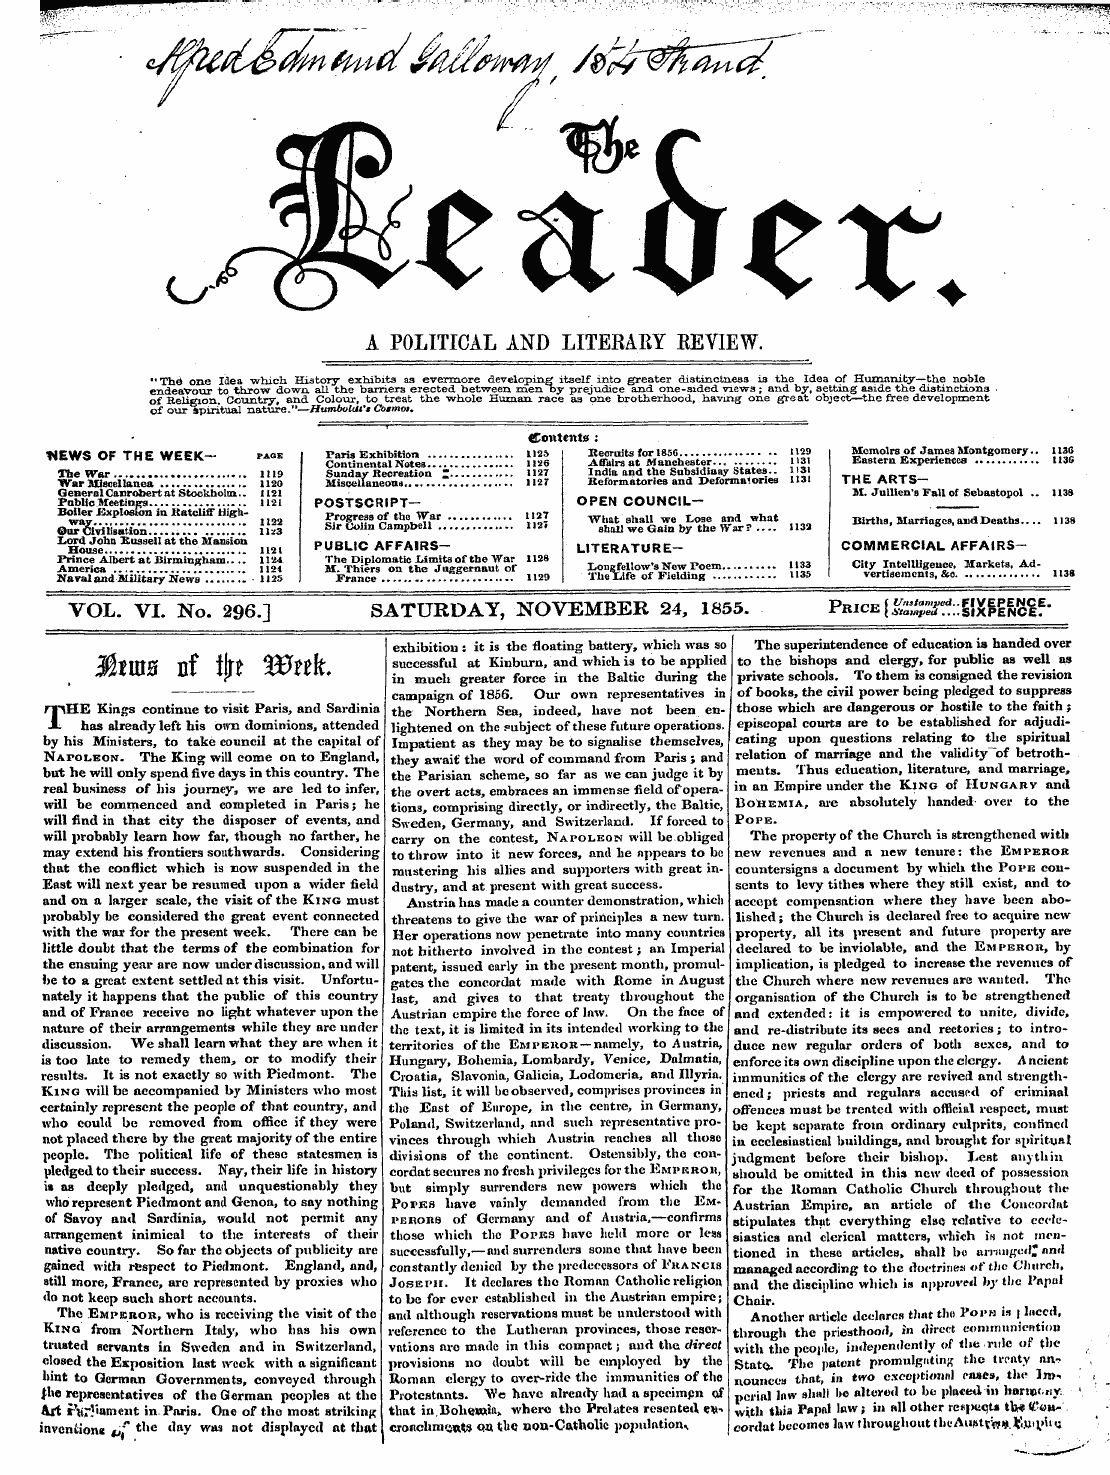 Leader (1850-1860): jS F Y, 2nd edition - Iih' ;' ','¦''. ¦'• ' . . '¦¦ .'¦'¦'¦.-/...